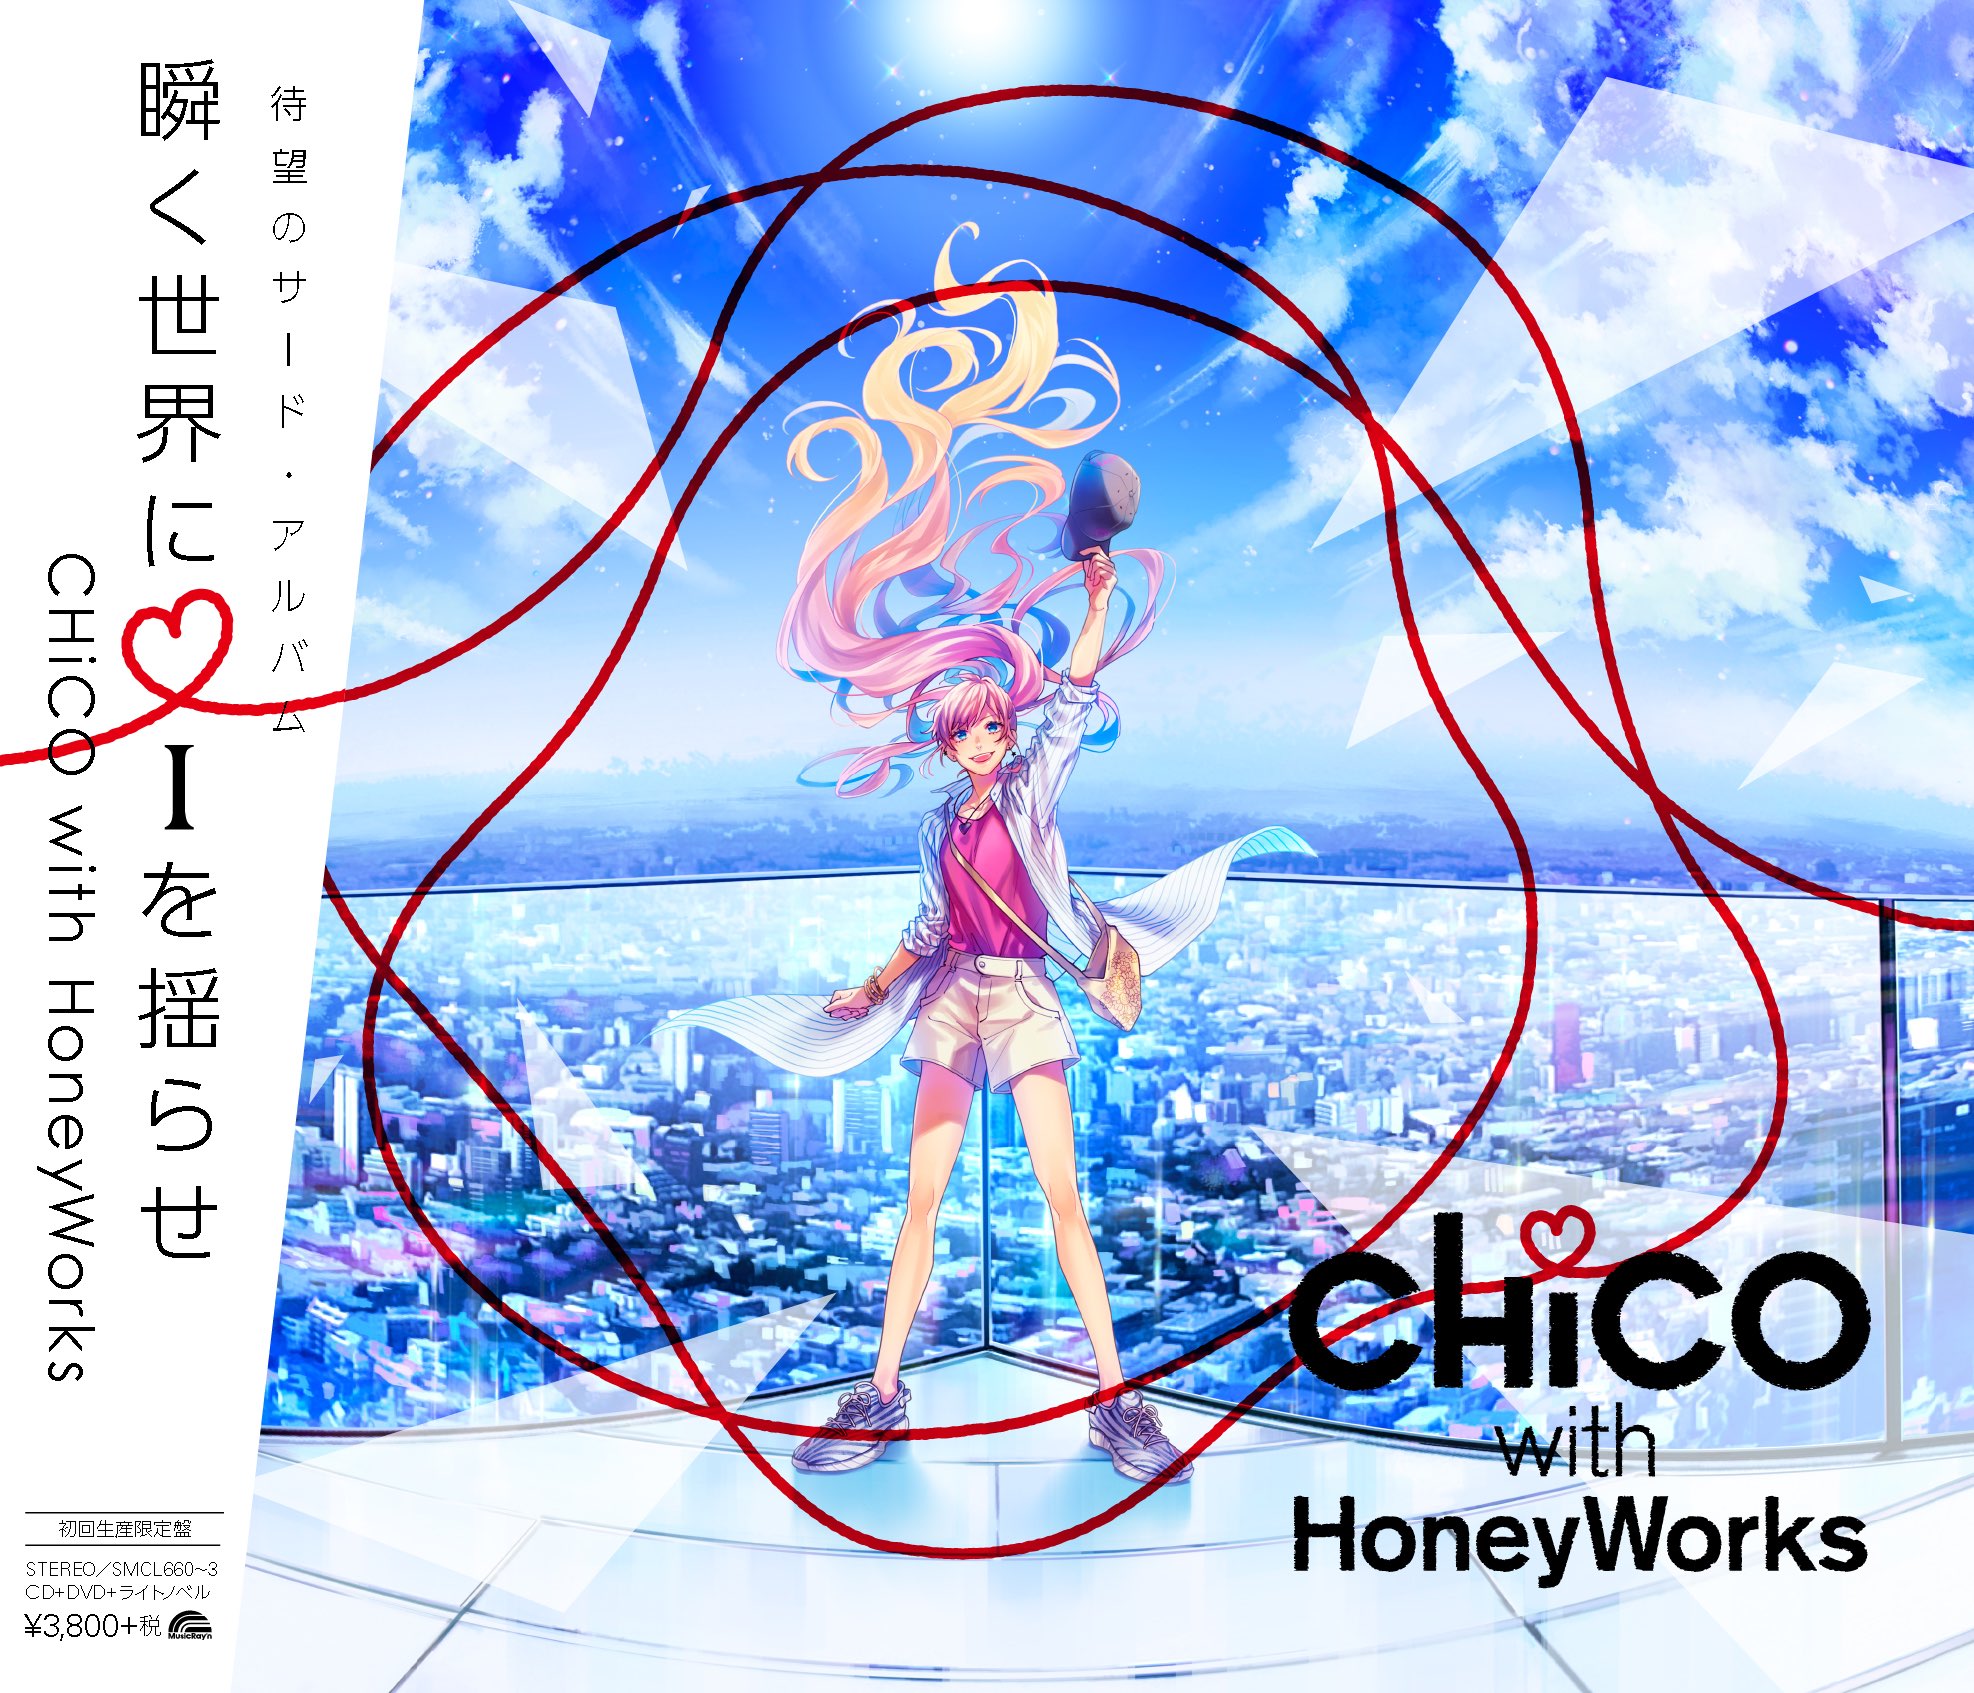 Chico With Honeyworks 待望の3rdアルバム 瞬く世界に I を揺らせ 9月16日に発売決定 News Honeyworks Official Web Site